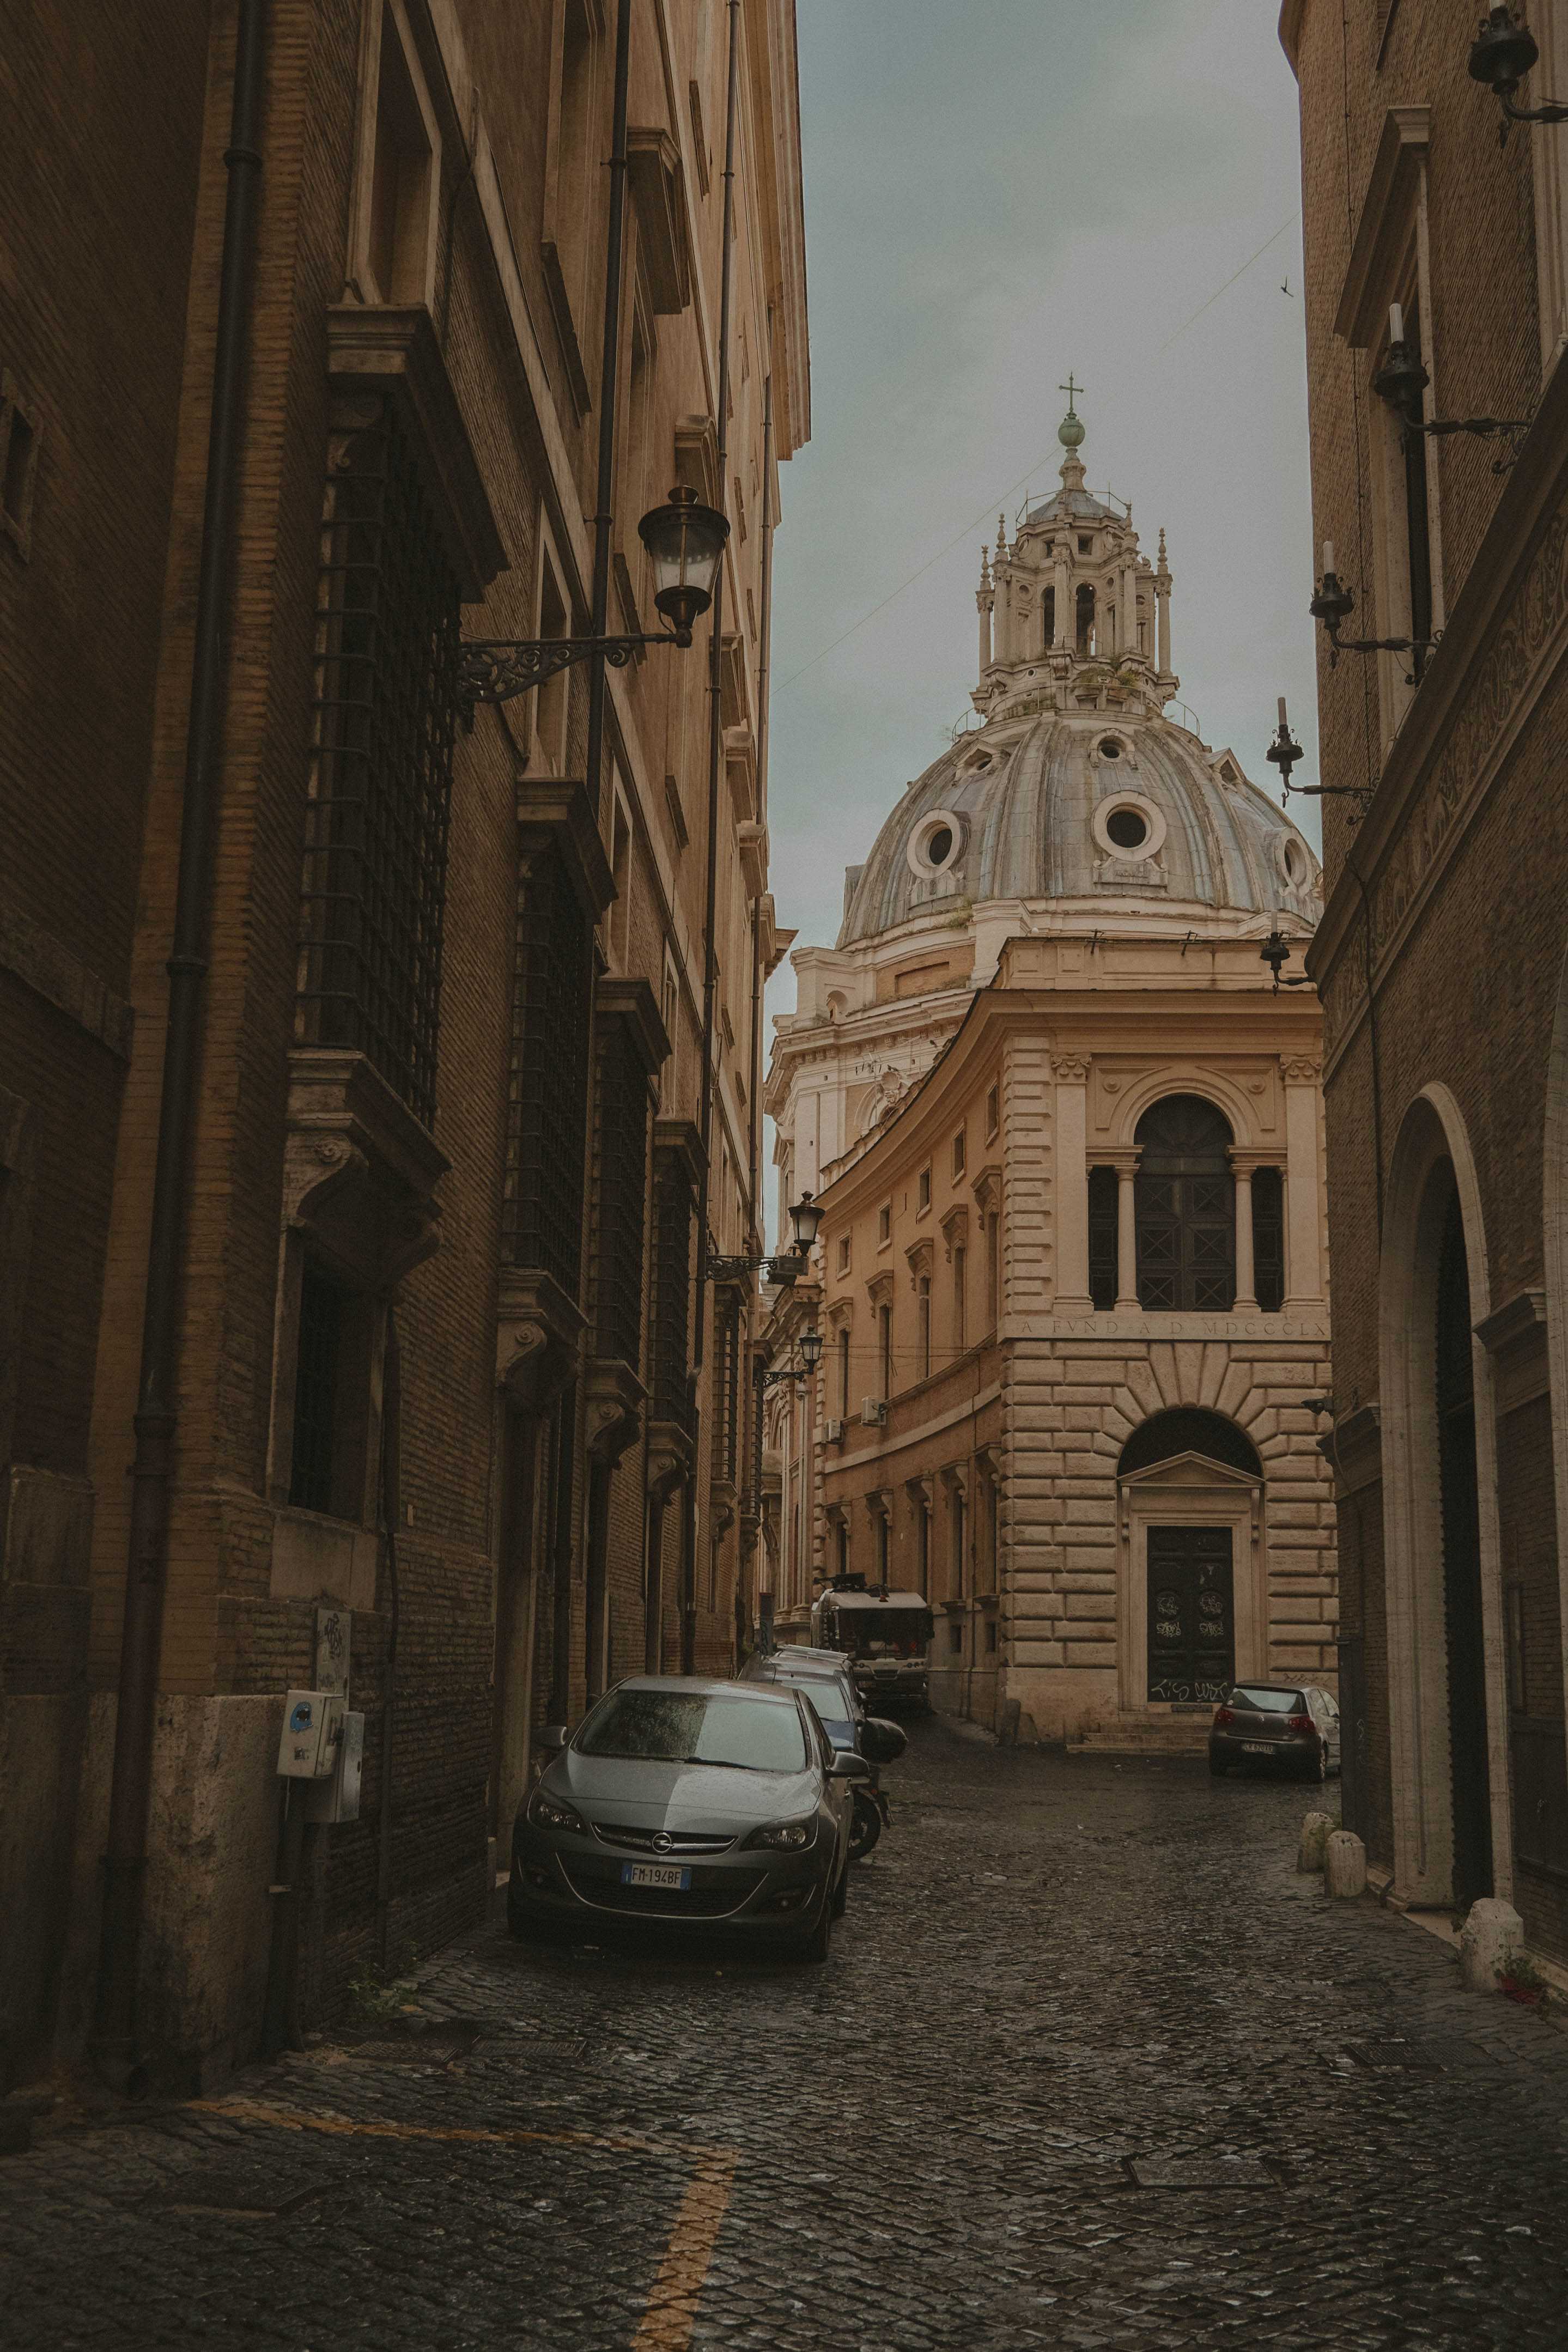 Alleyway, looking towards a church